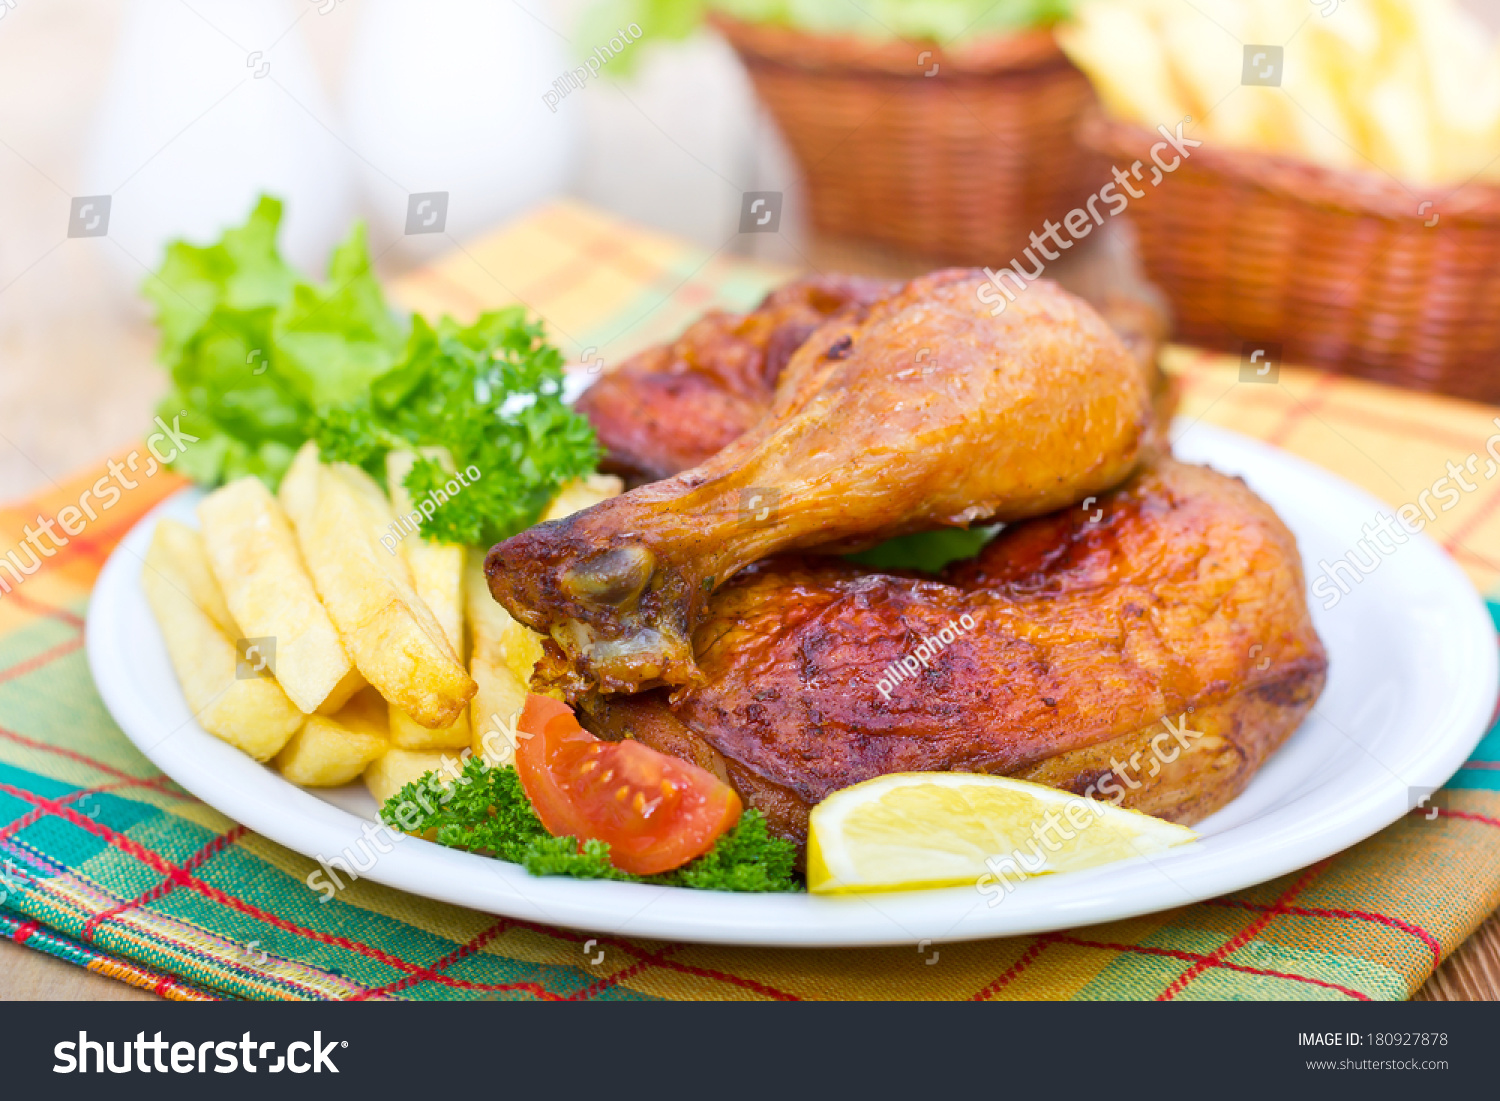 Roasted Chicken Legs On Plate Stock Photo 180927878 - Shutterstock